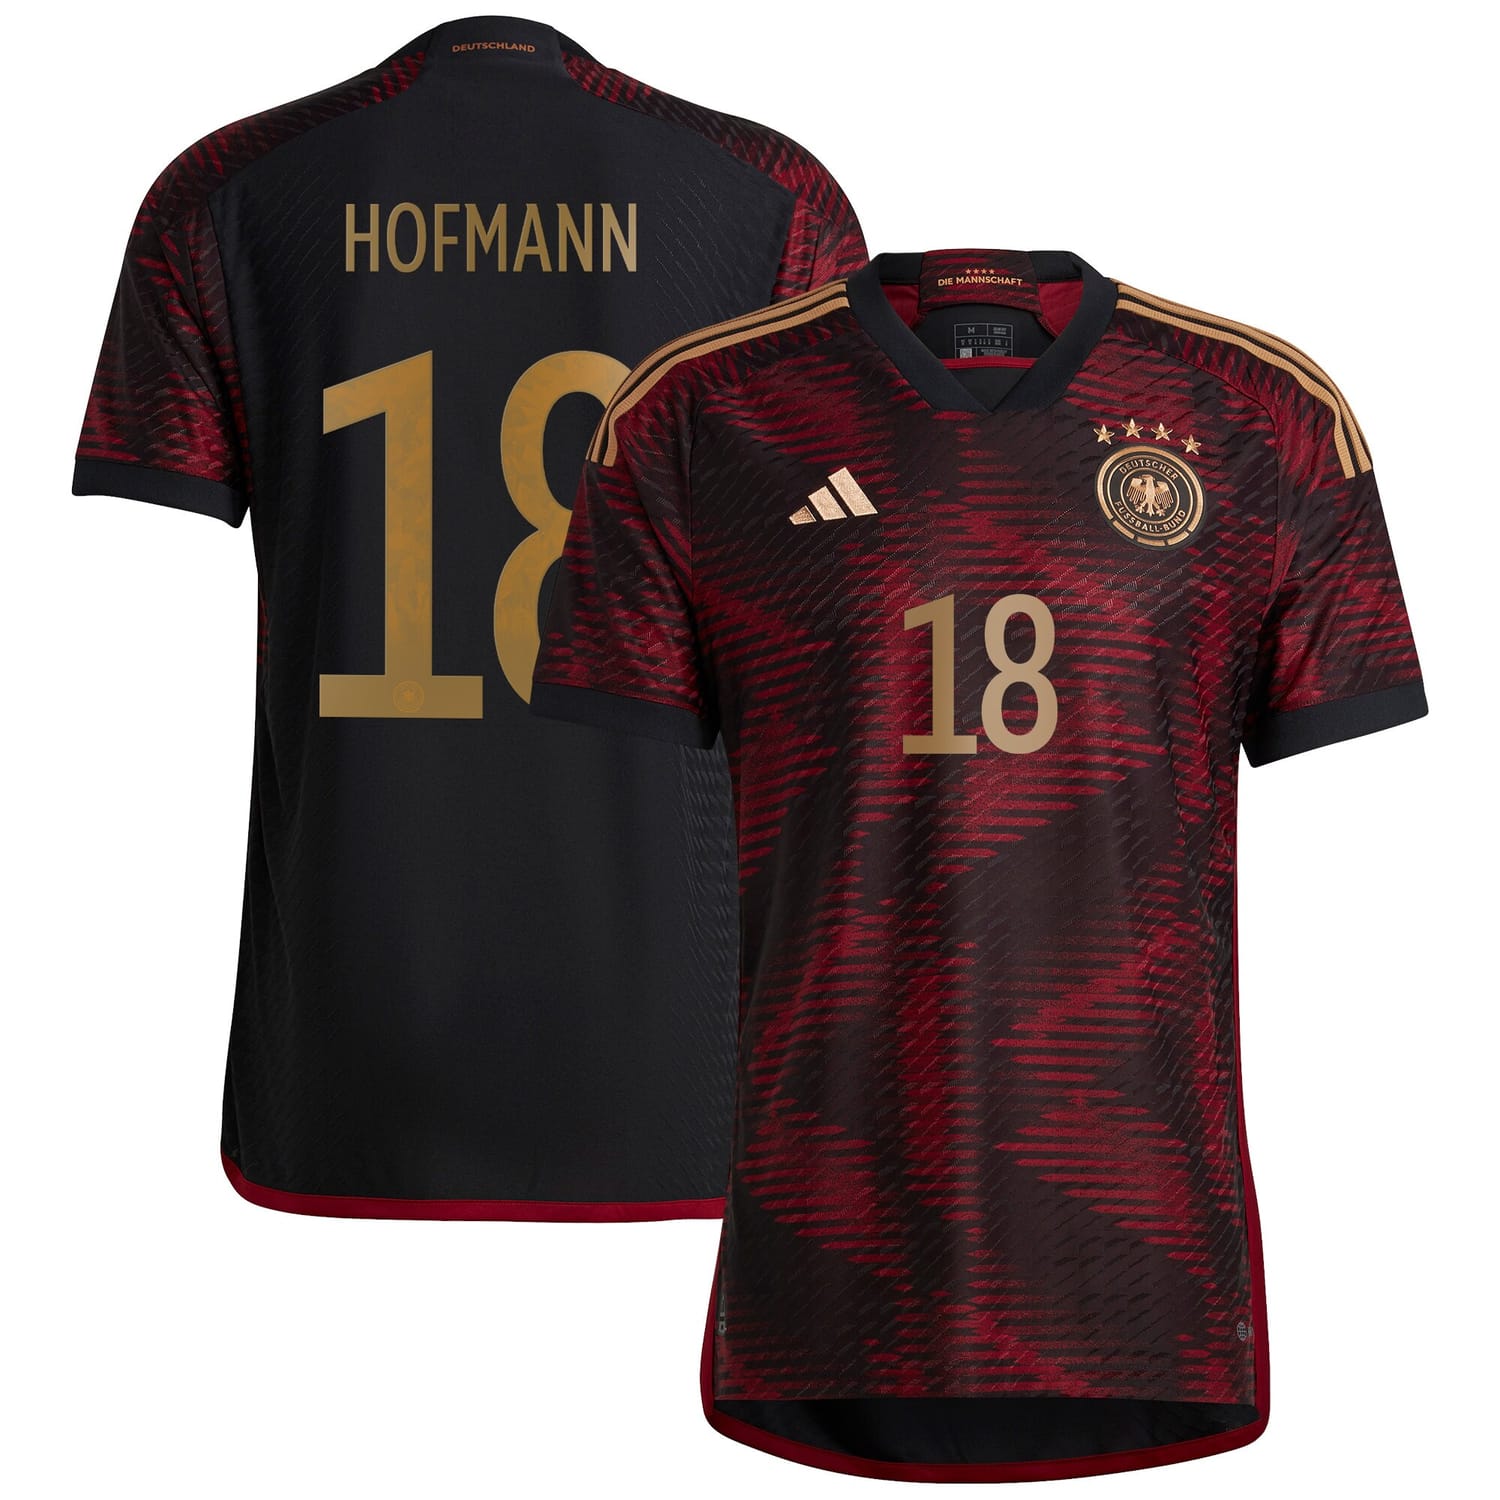 Germany National Team Away Authentic Jersey Shirt player Jonas Hofmann 18 printing for Men